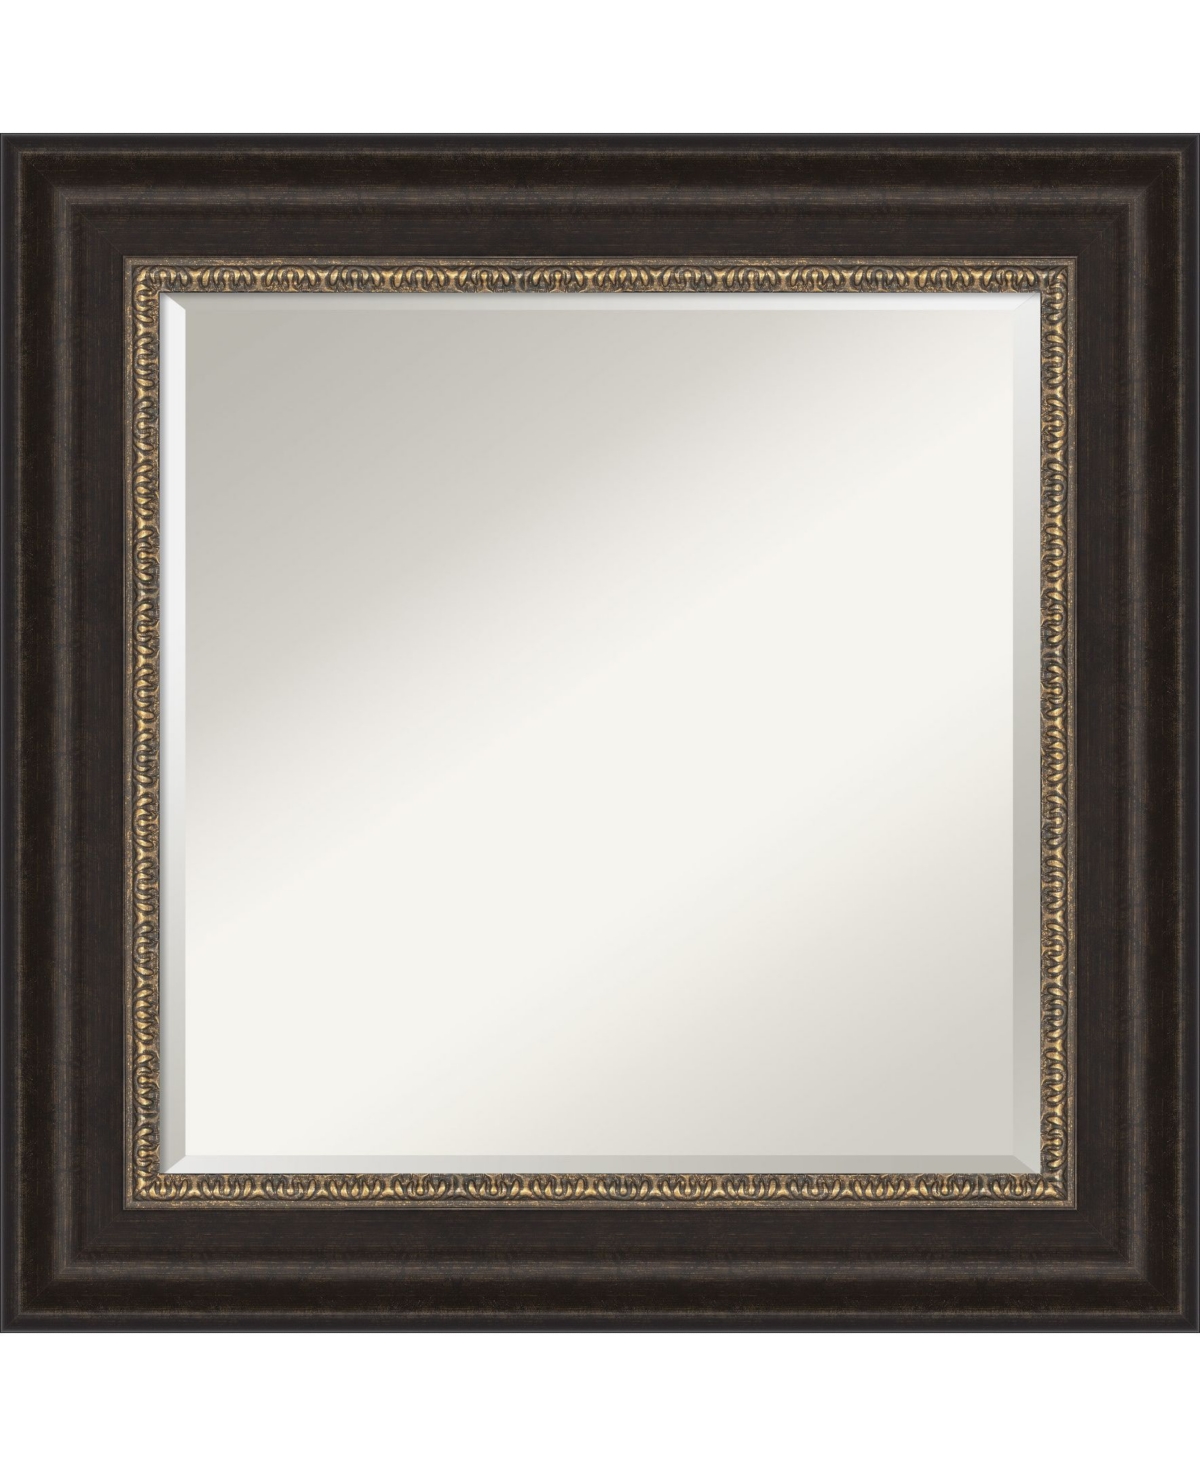 Impact Framed Bathroom Vanity Wall Mirror, 26.25" x 26.25" - Bronze